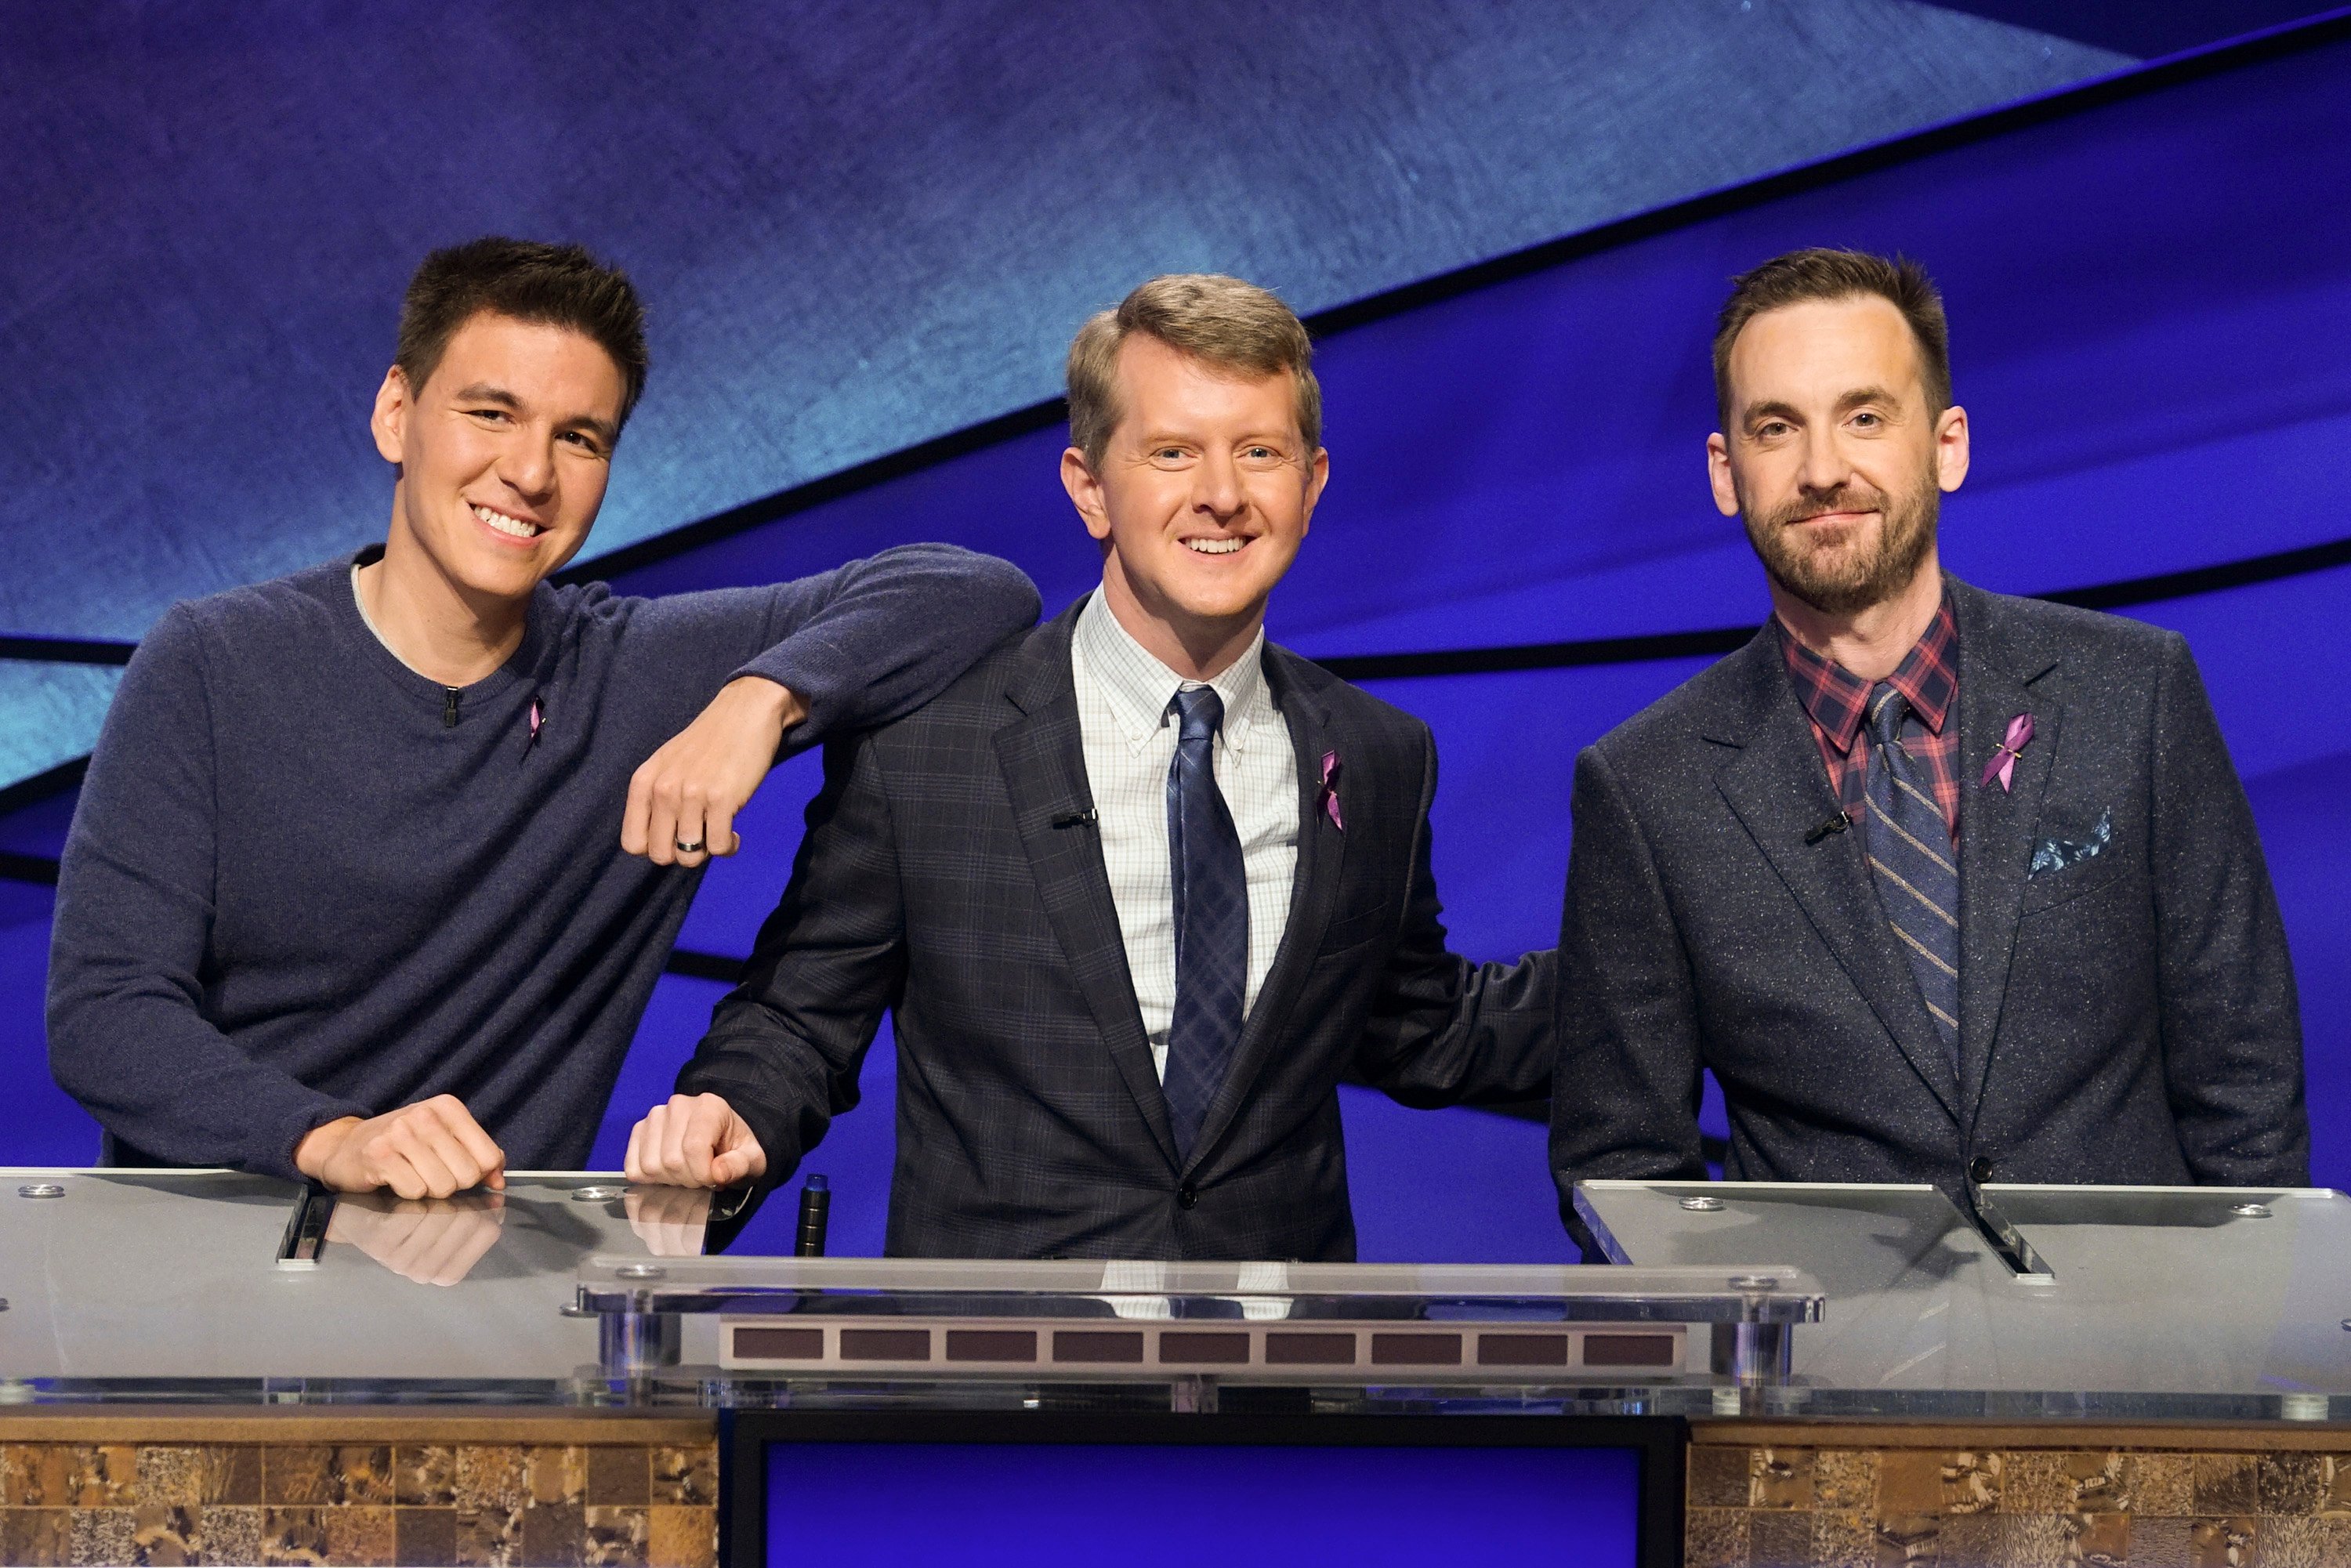 'Jeopardy!' champs James Holzhauer, Ken Jennings, and Brad Rutter